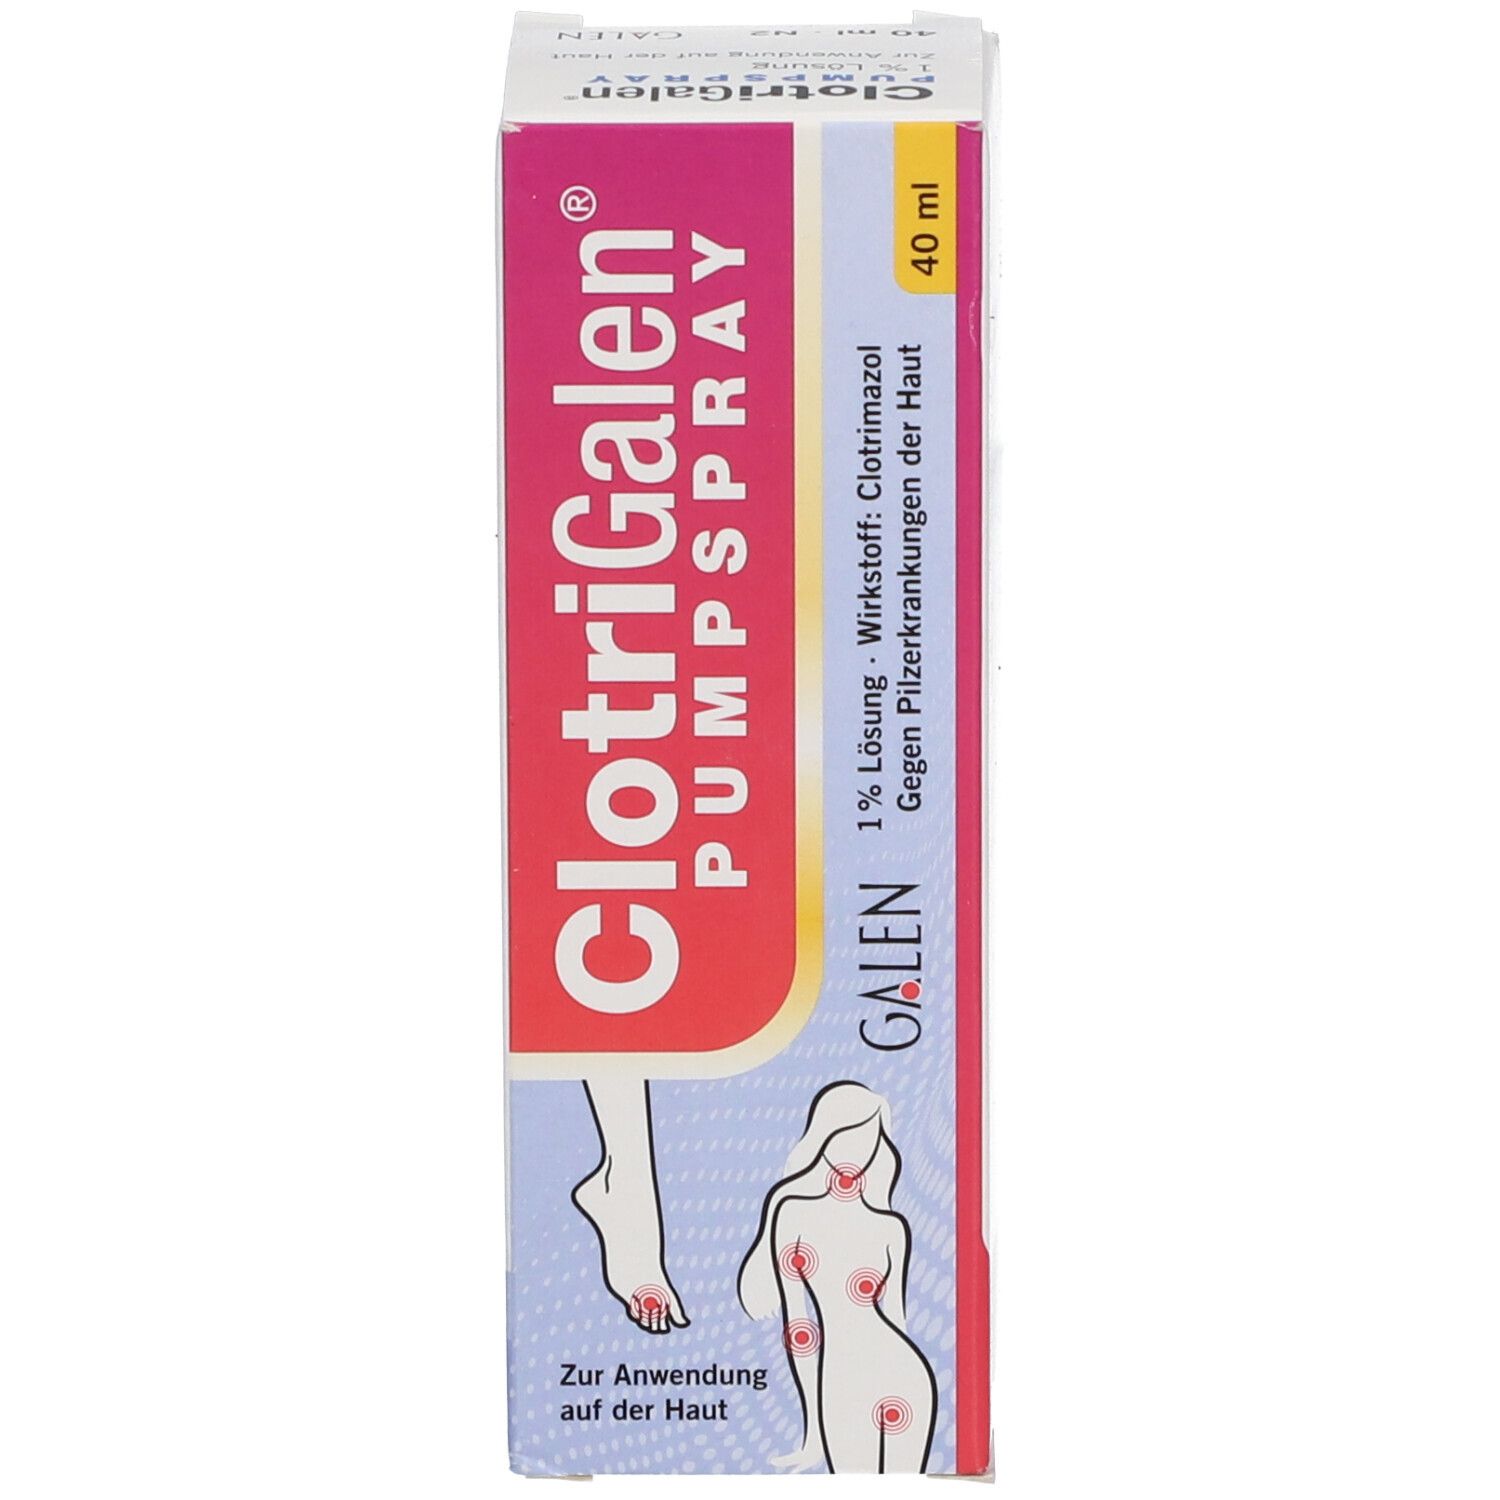 Clotrigalen® Pumpspray